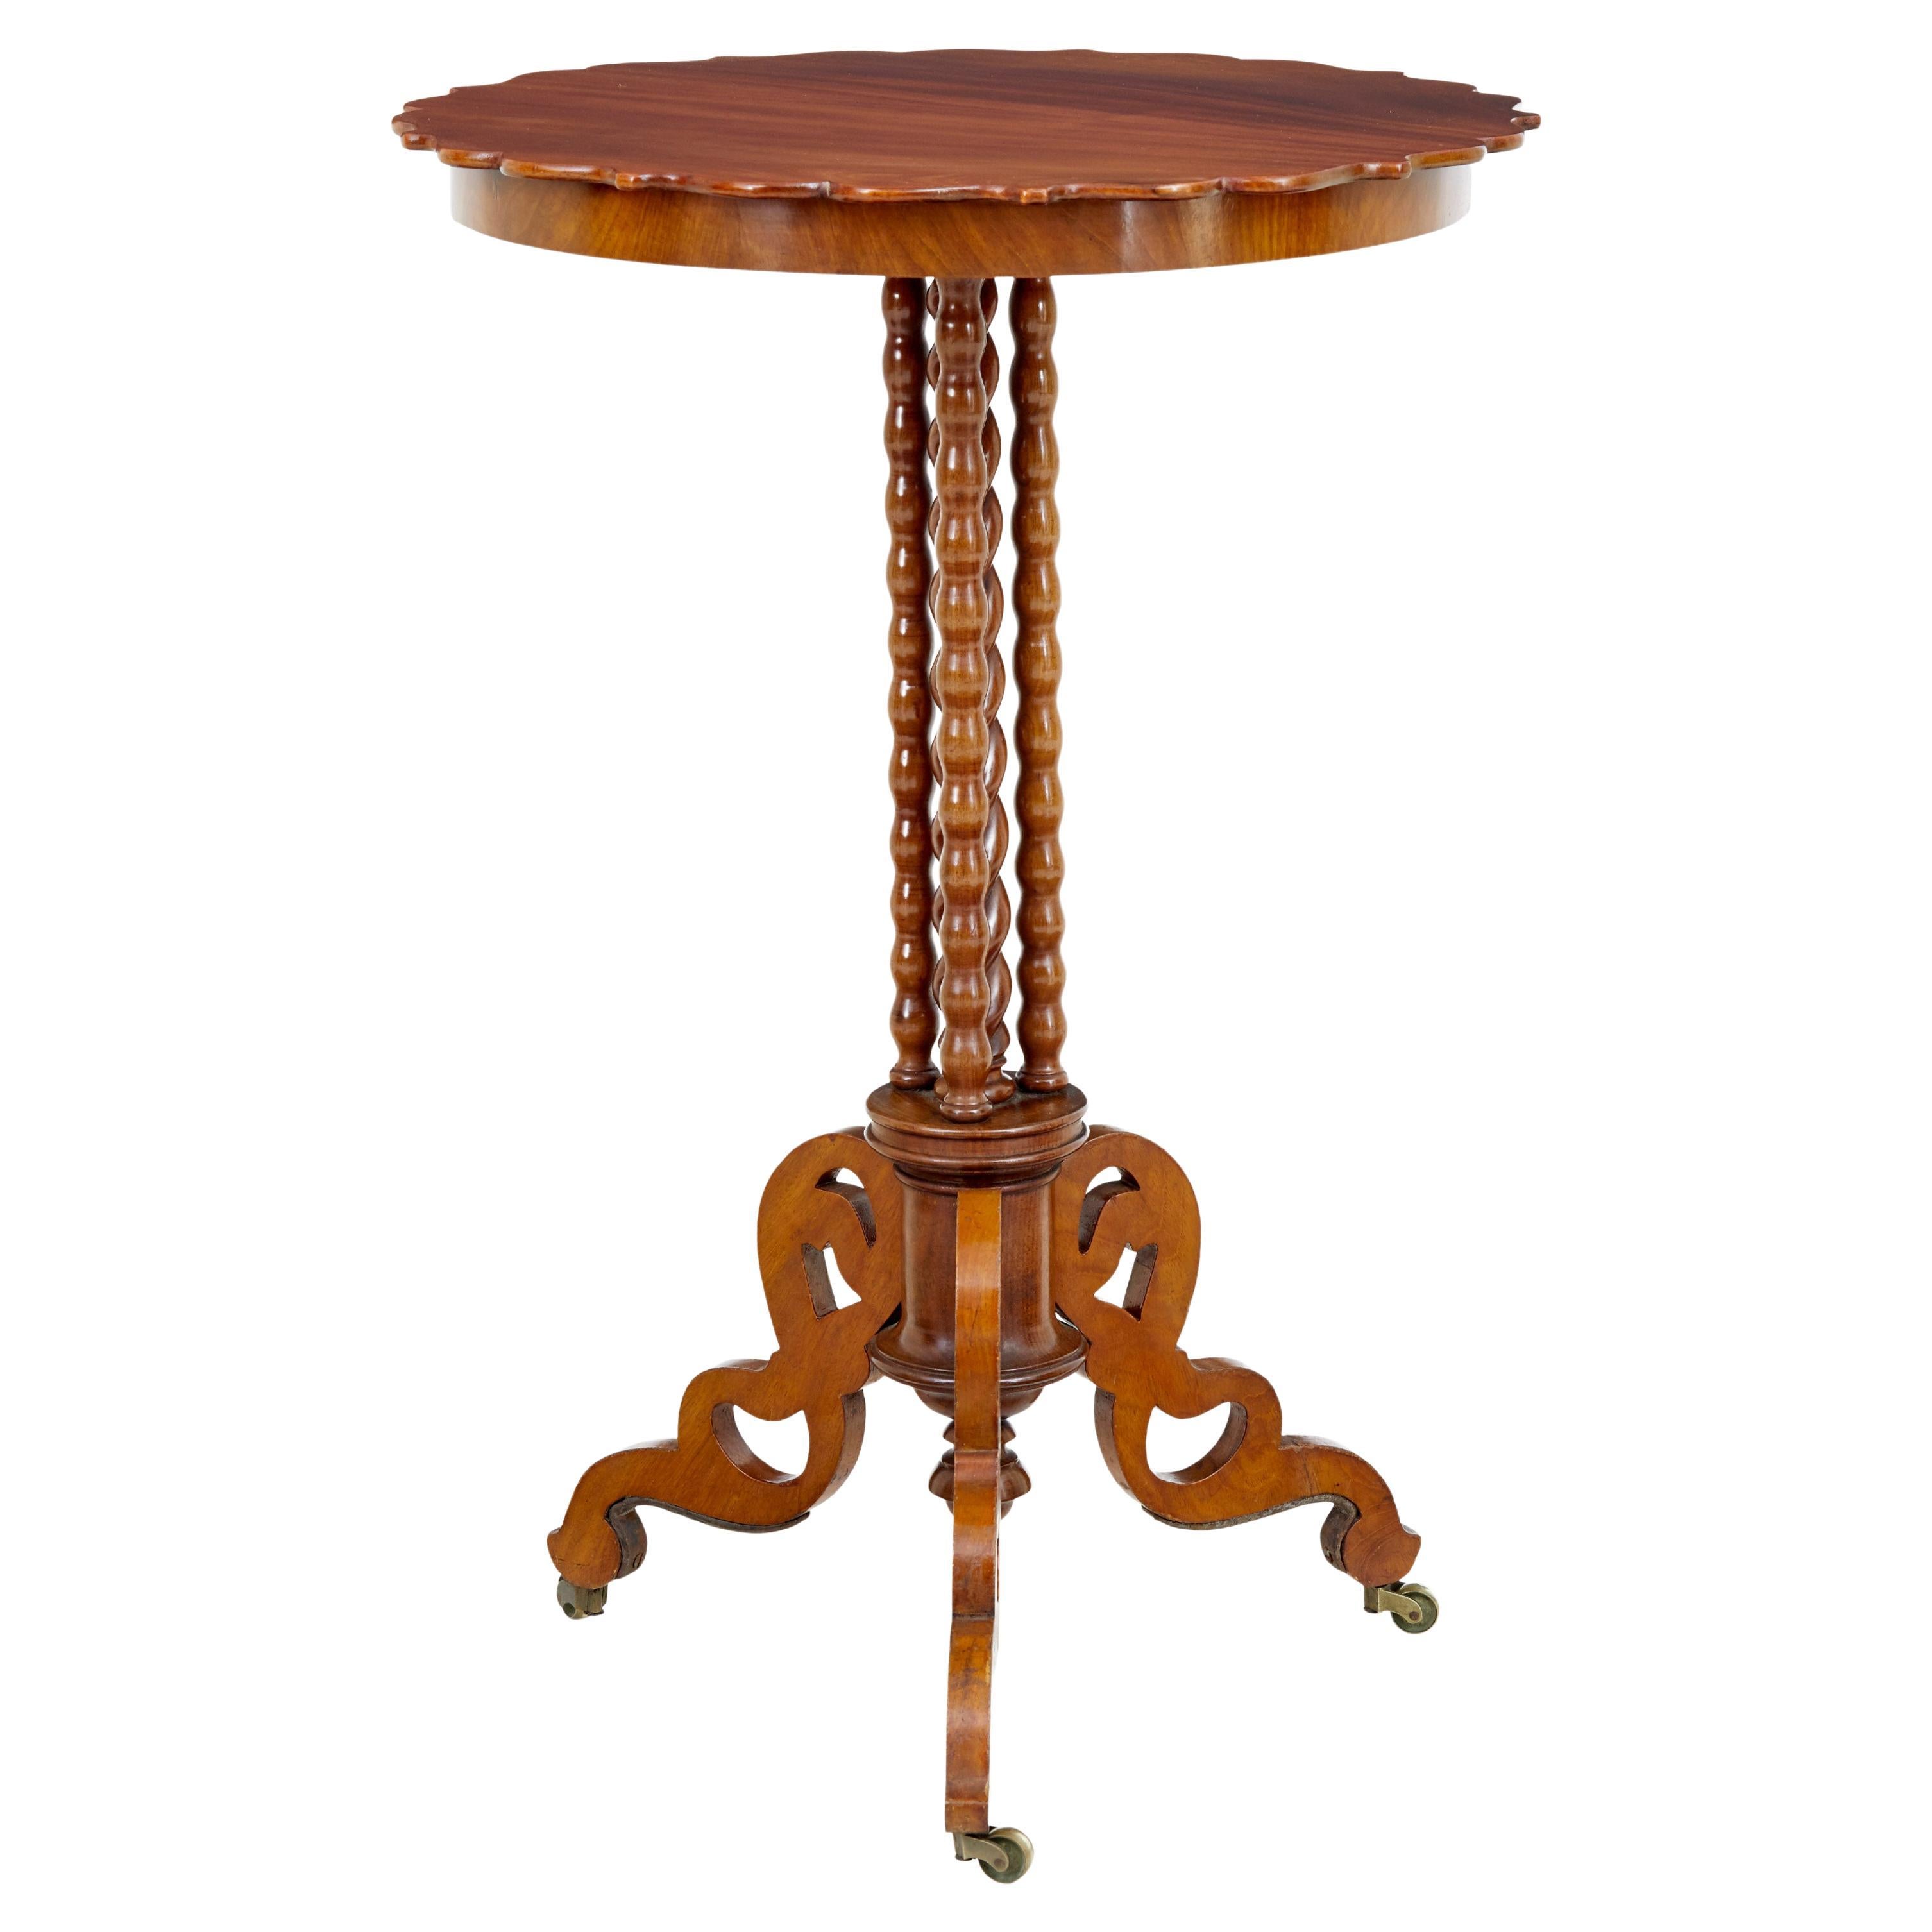 Late 19th century mahogany bobbin turned occasional table